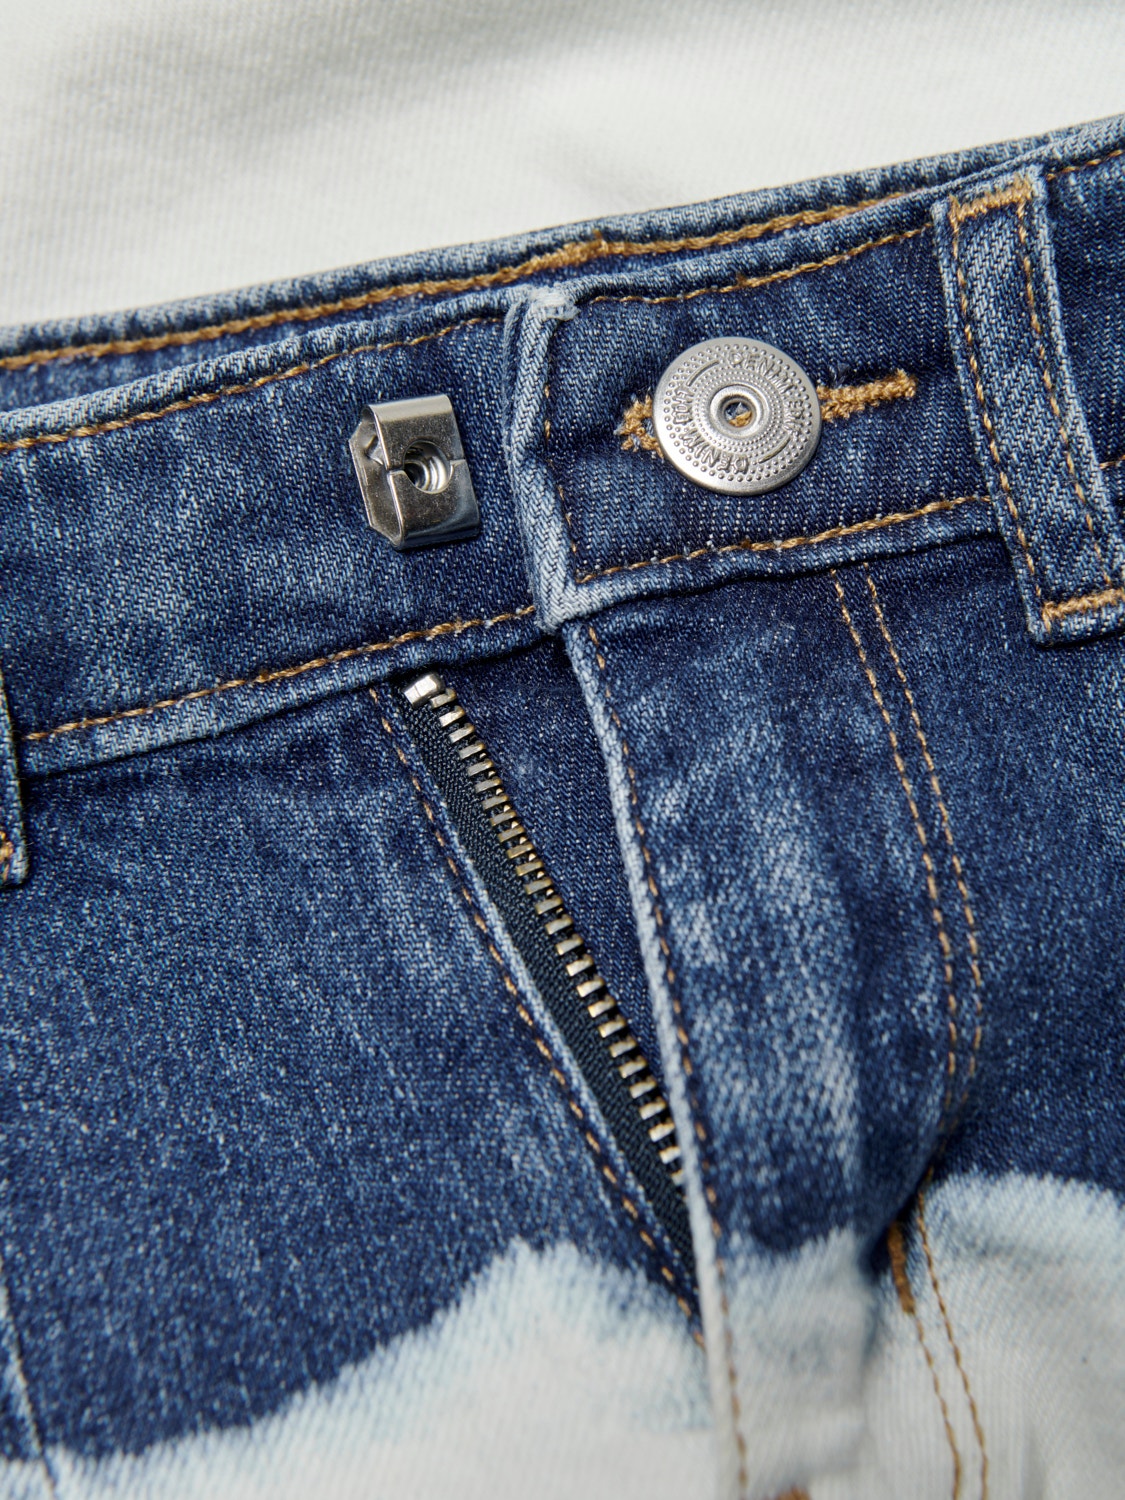 ONLY Modelo KOGLiva corte holgado efecto teñido Jeans de talle alto -Light Medium Blue Denim - 15247841